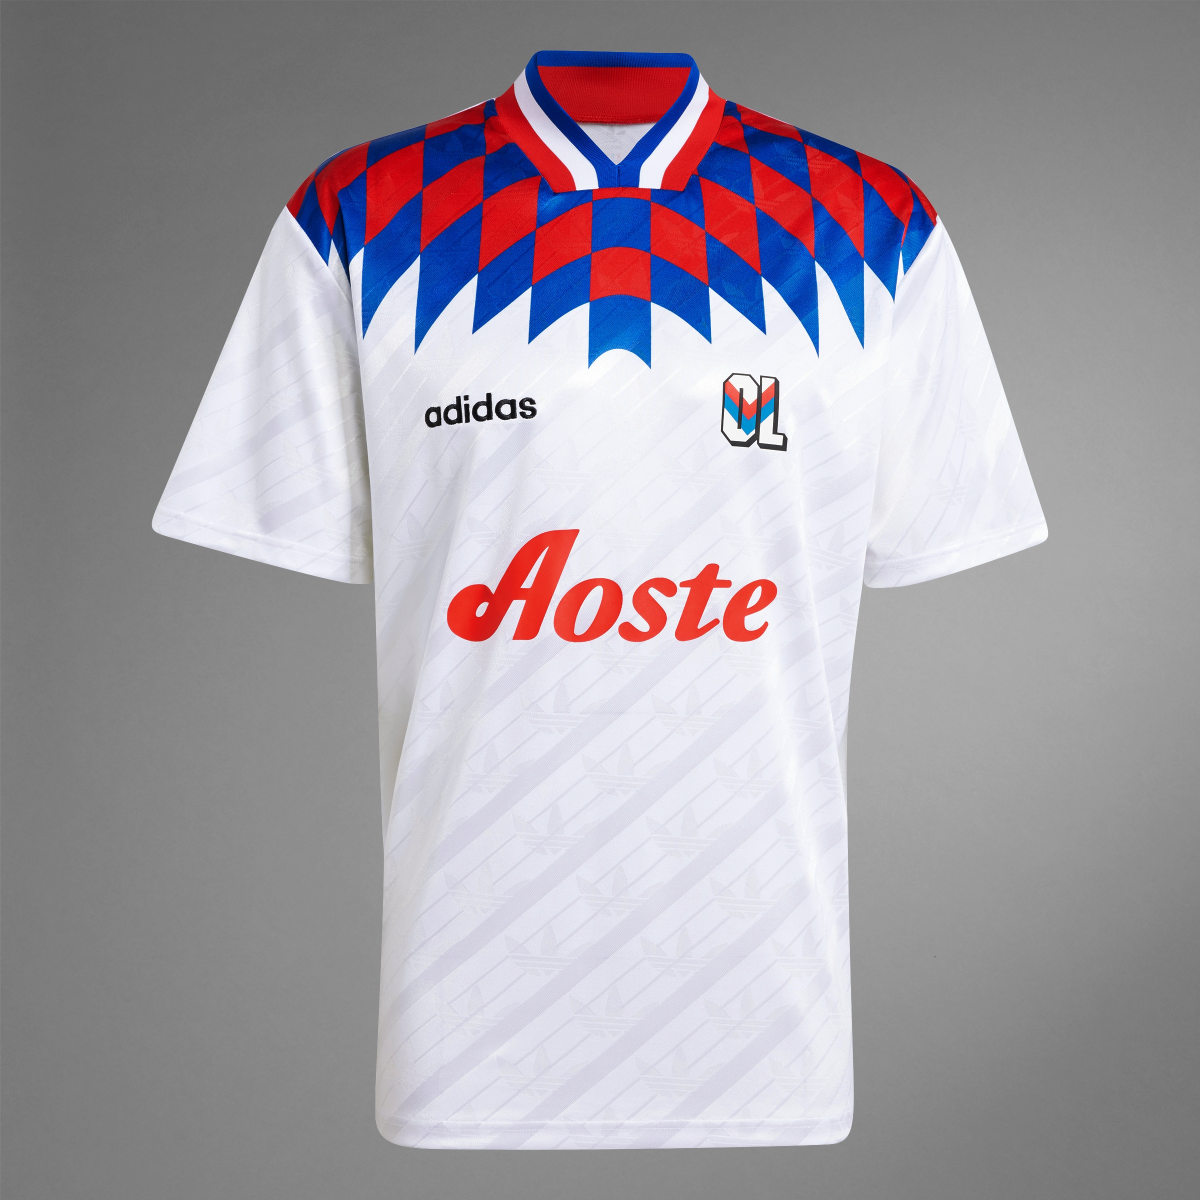 Adidas Koszulka Olympique Lyonnais 95/96 Bringback. 10